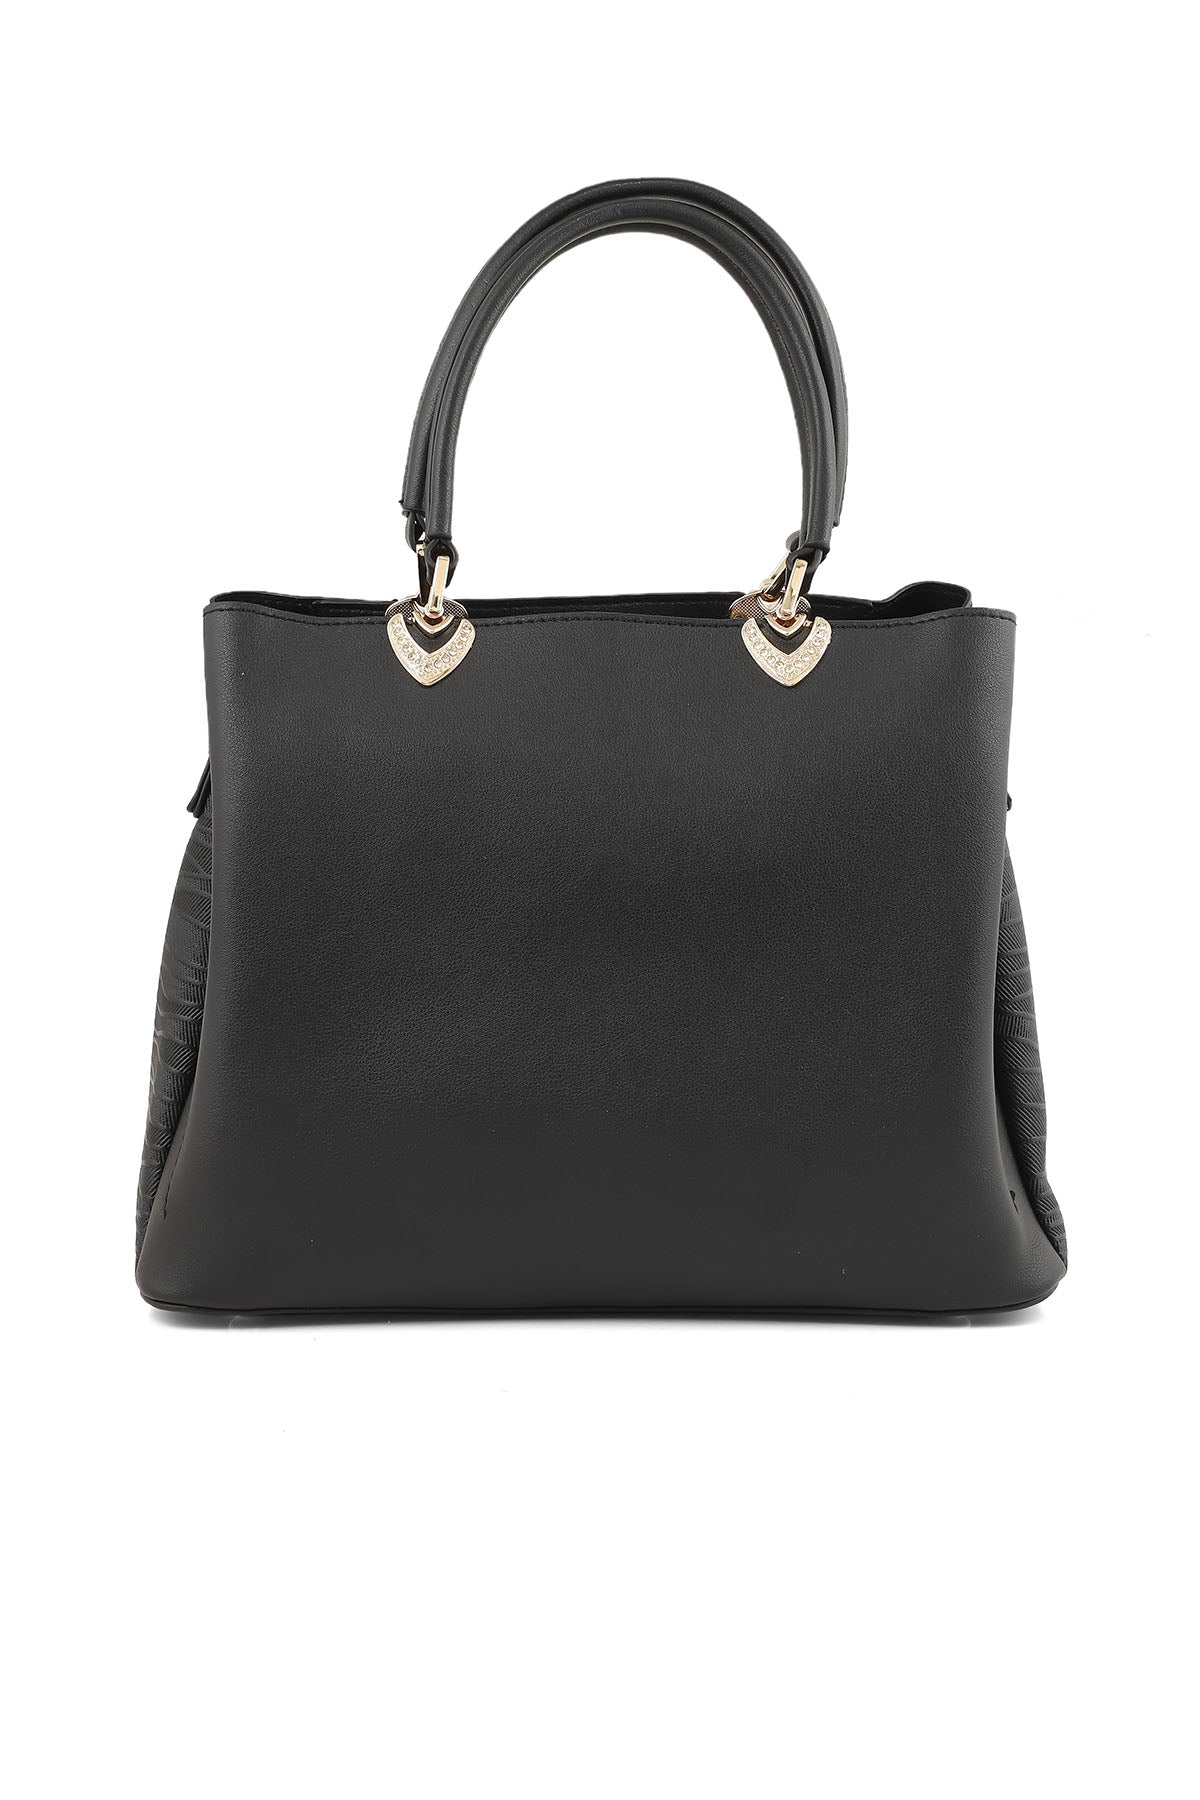 Formal Tote Hand Bags B15052-Black